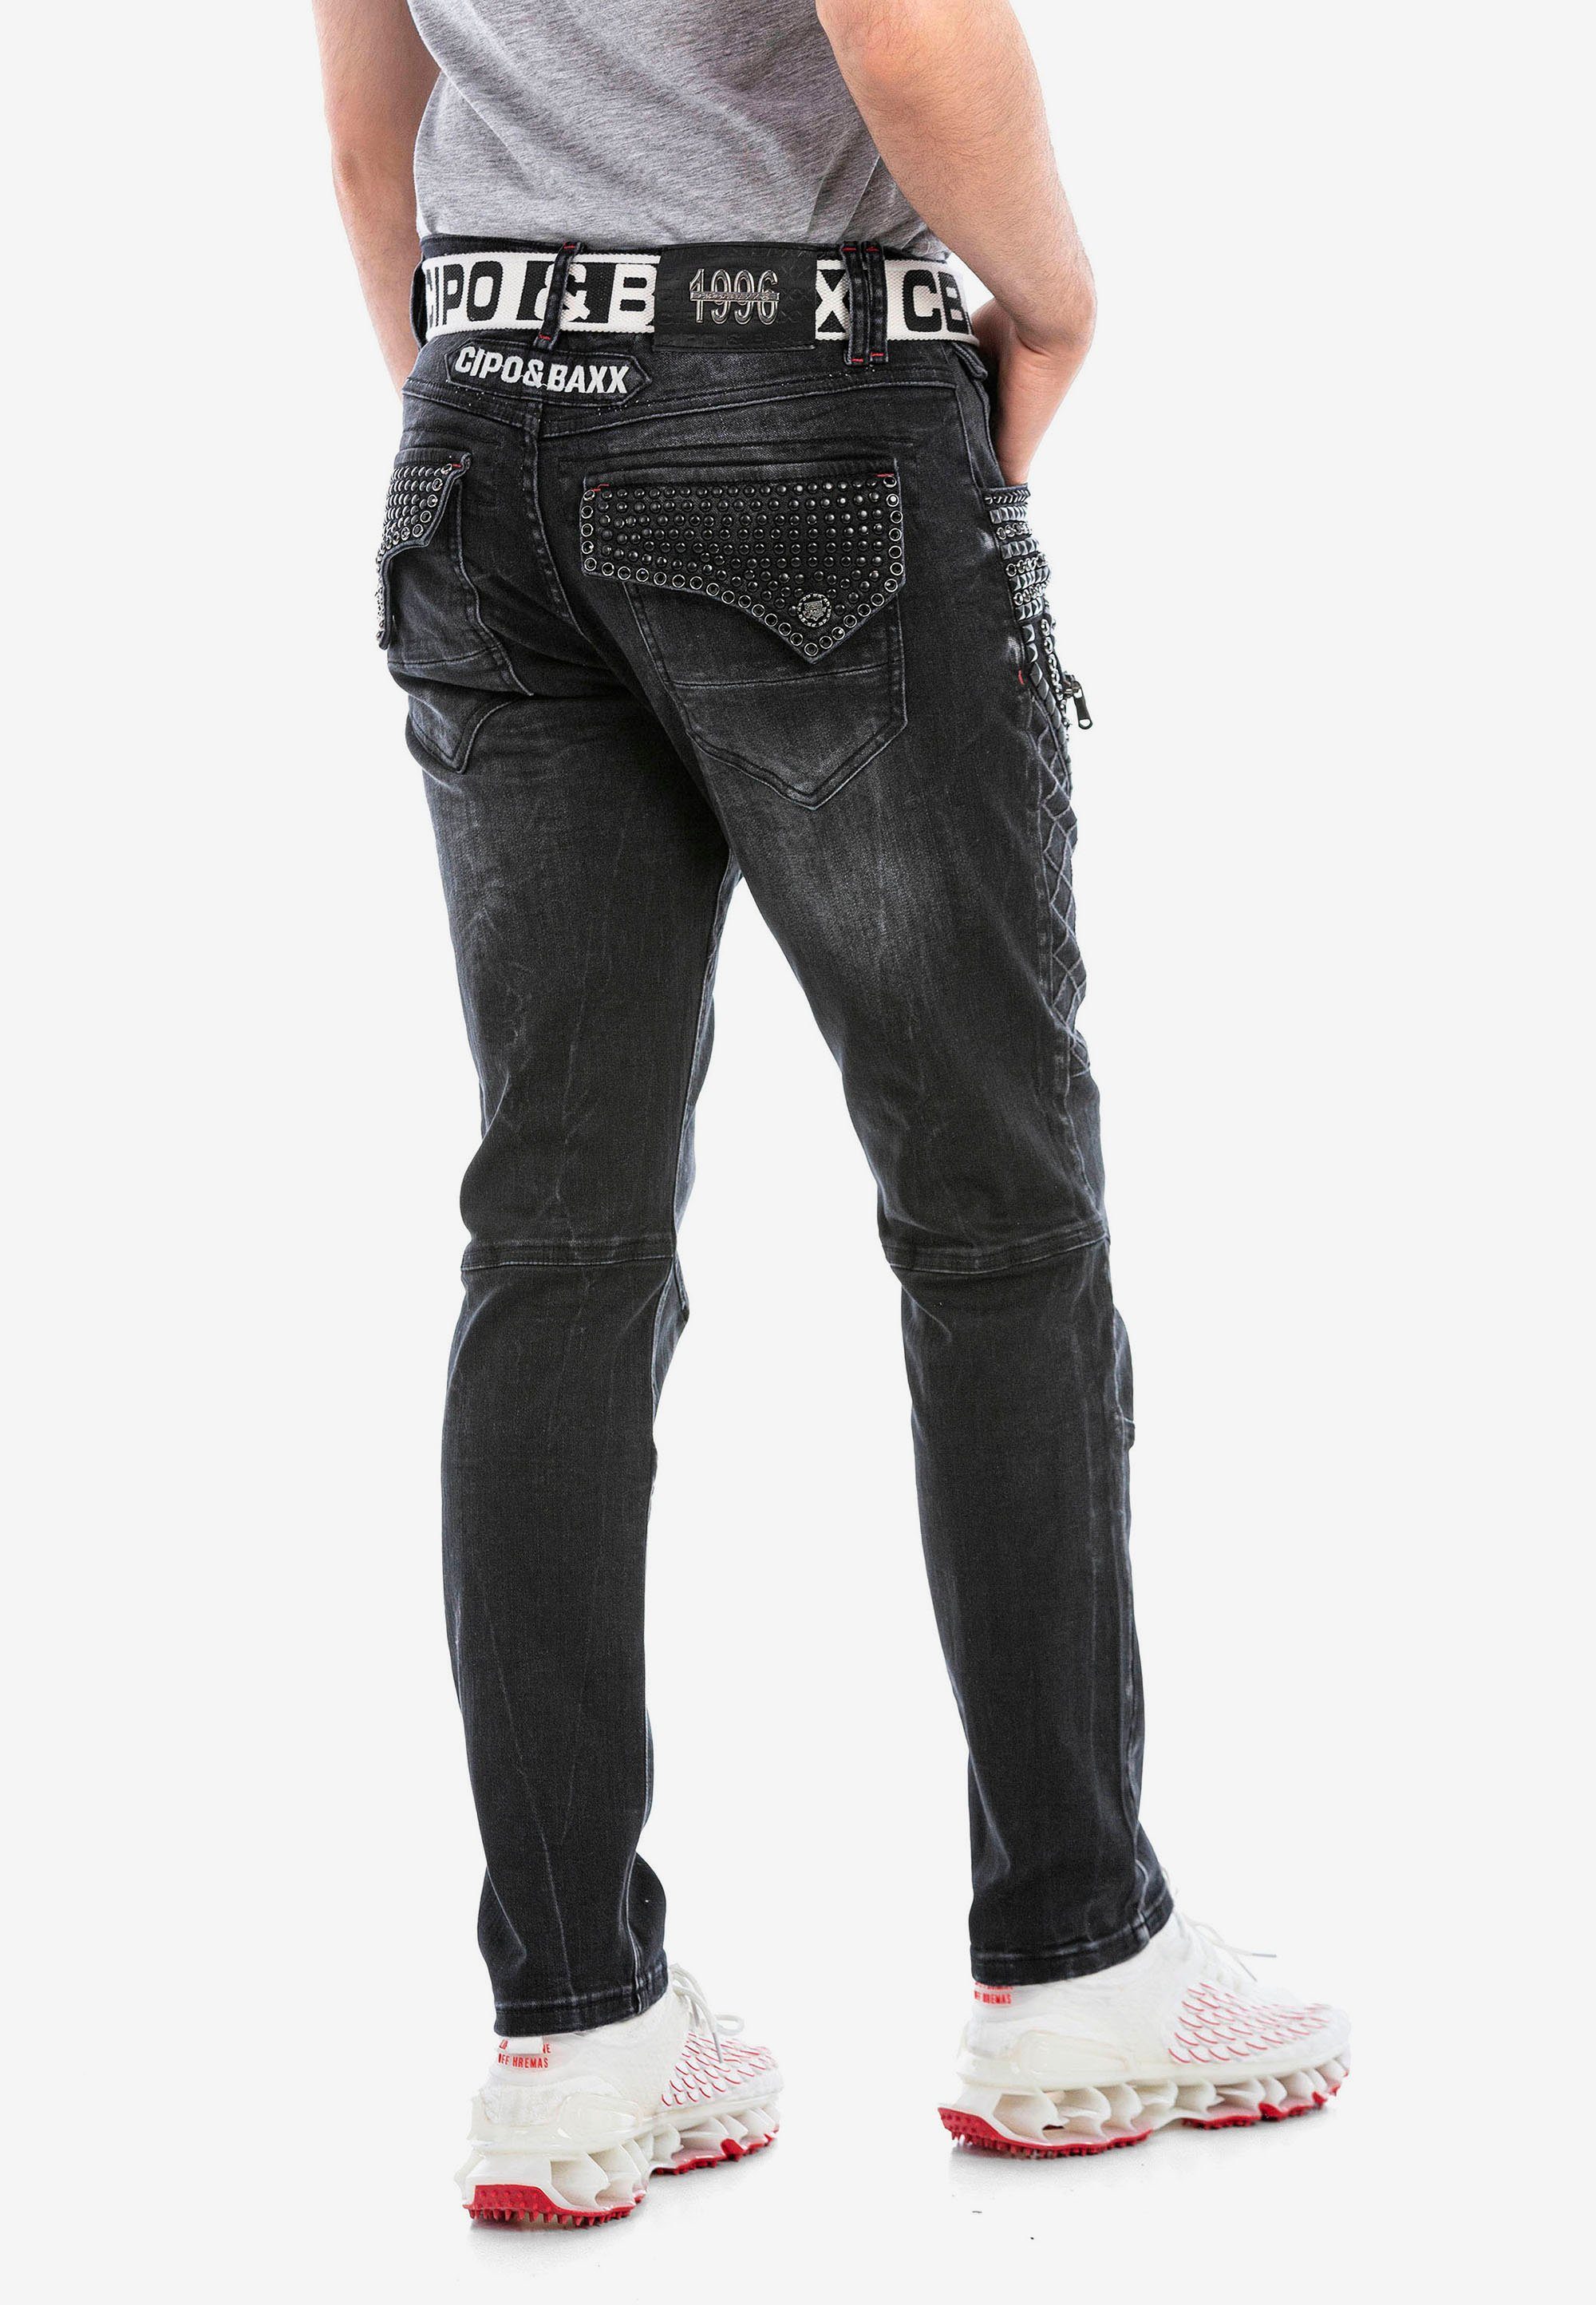 Cipo & Nieten coolen Baxx mit Slim-fit-Jeans